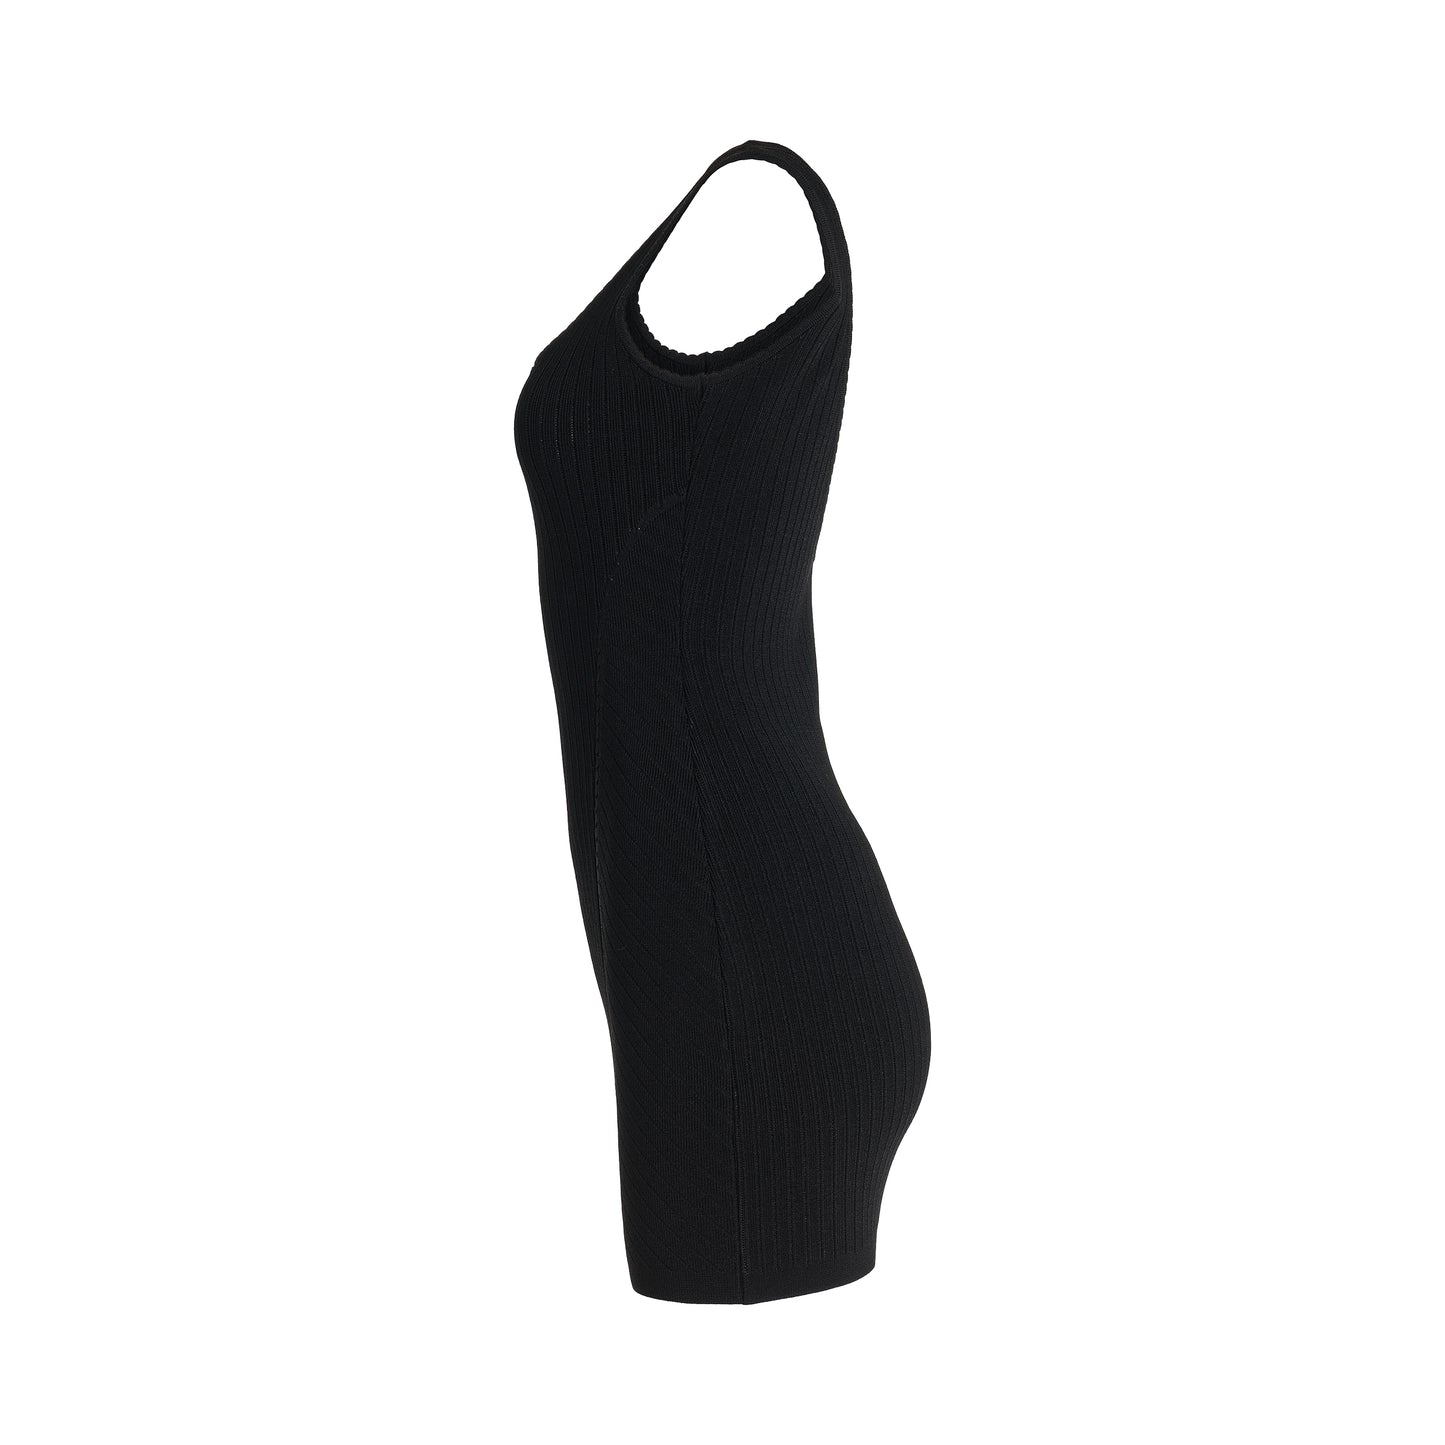 Sierra Lingerie Mini Dress in Black